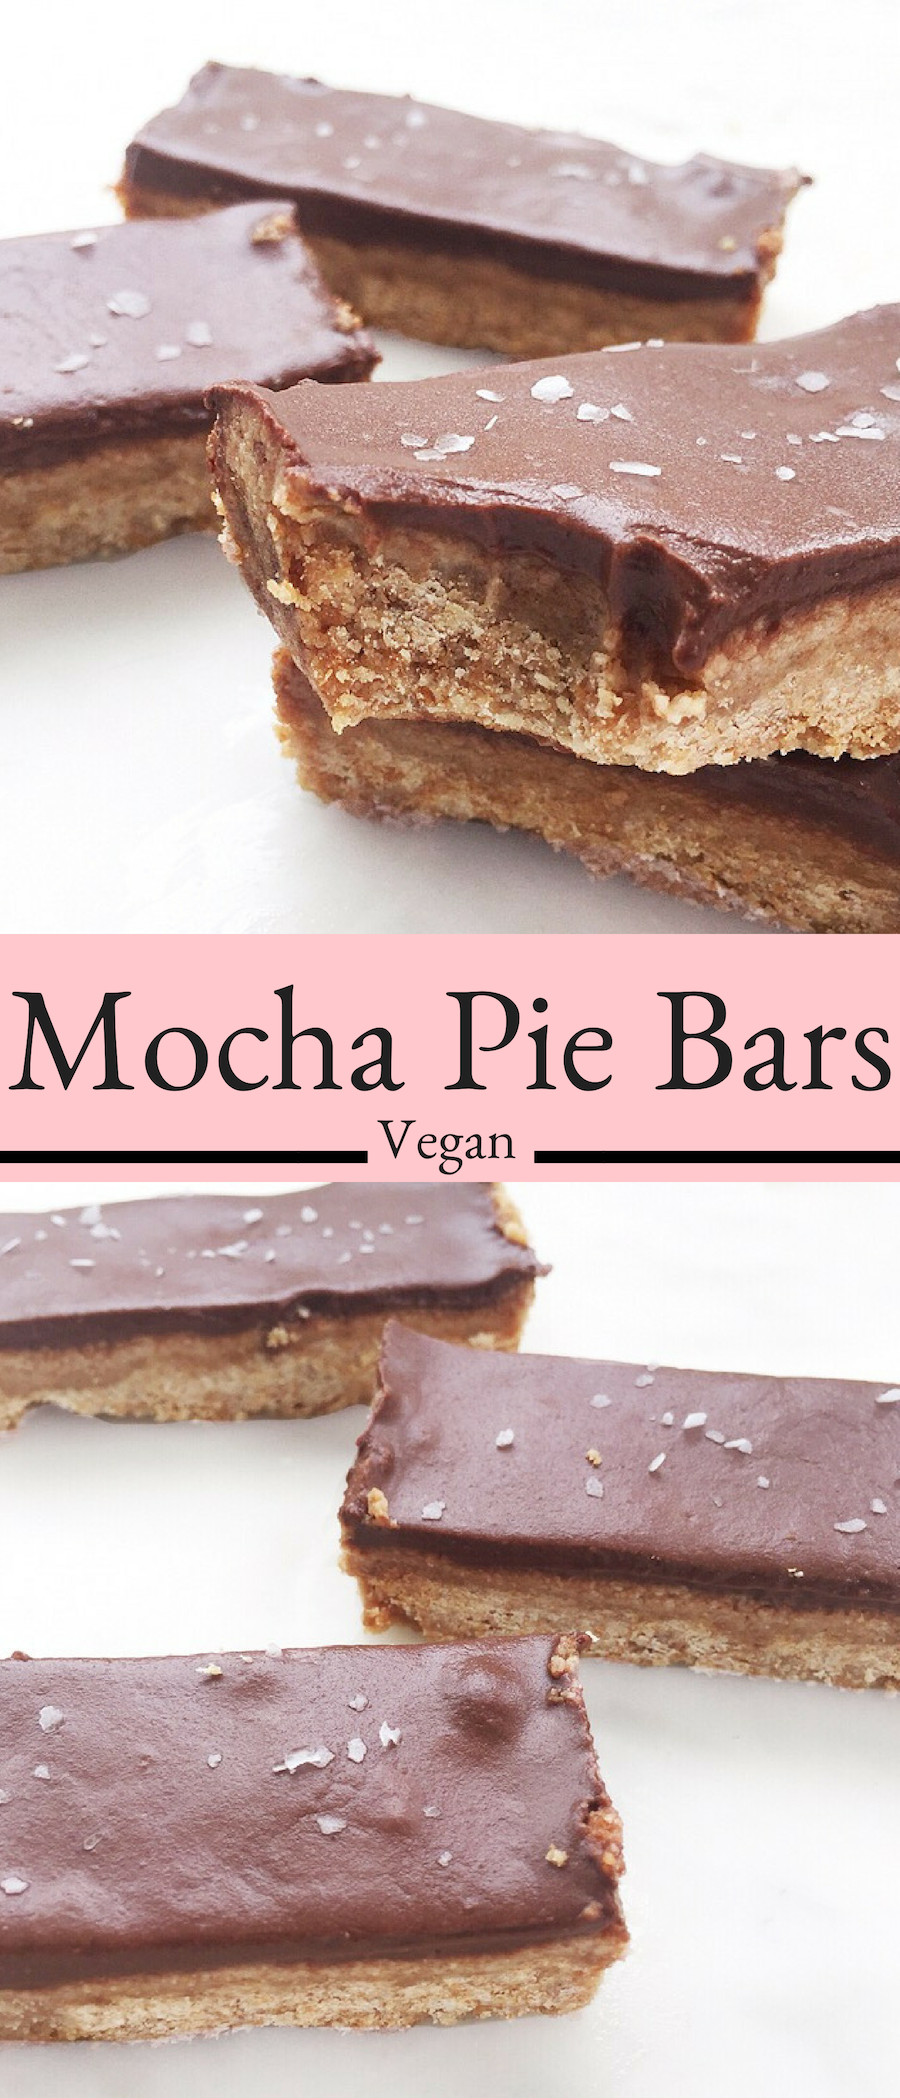 Vegan Dessert Recipes With Coconut Milk
 Mocha Pie Bars Recipe de bonne nourriture